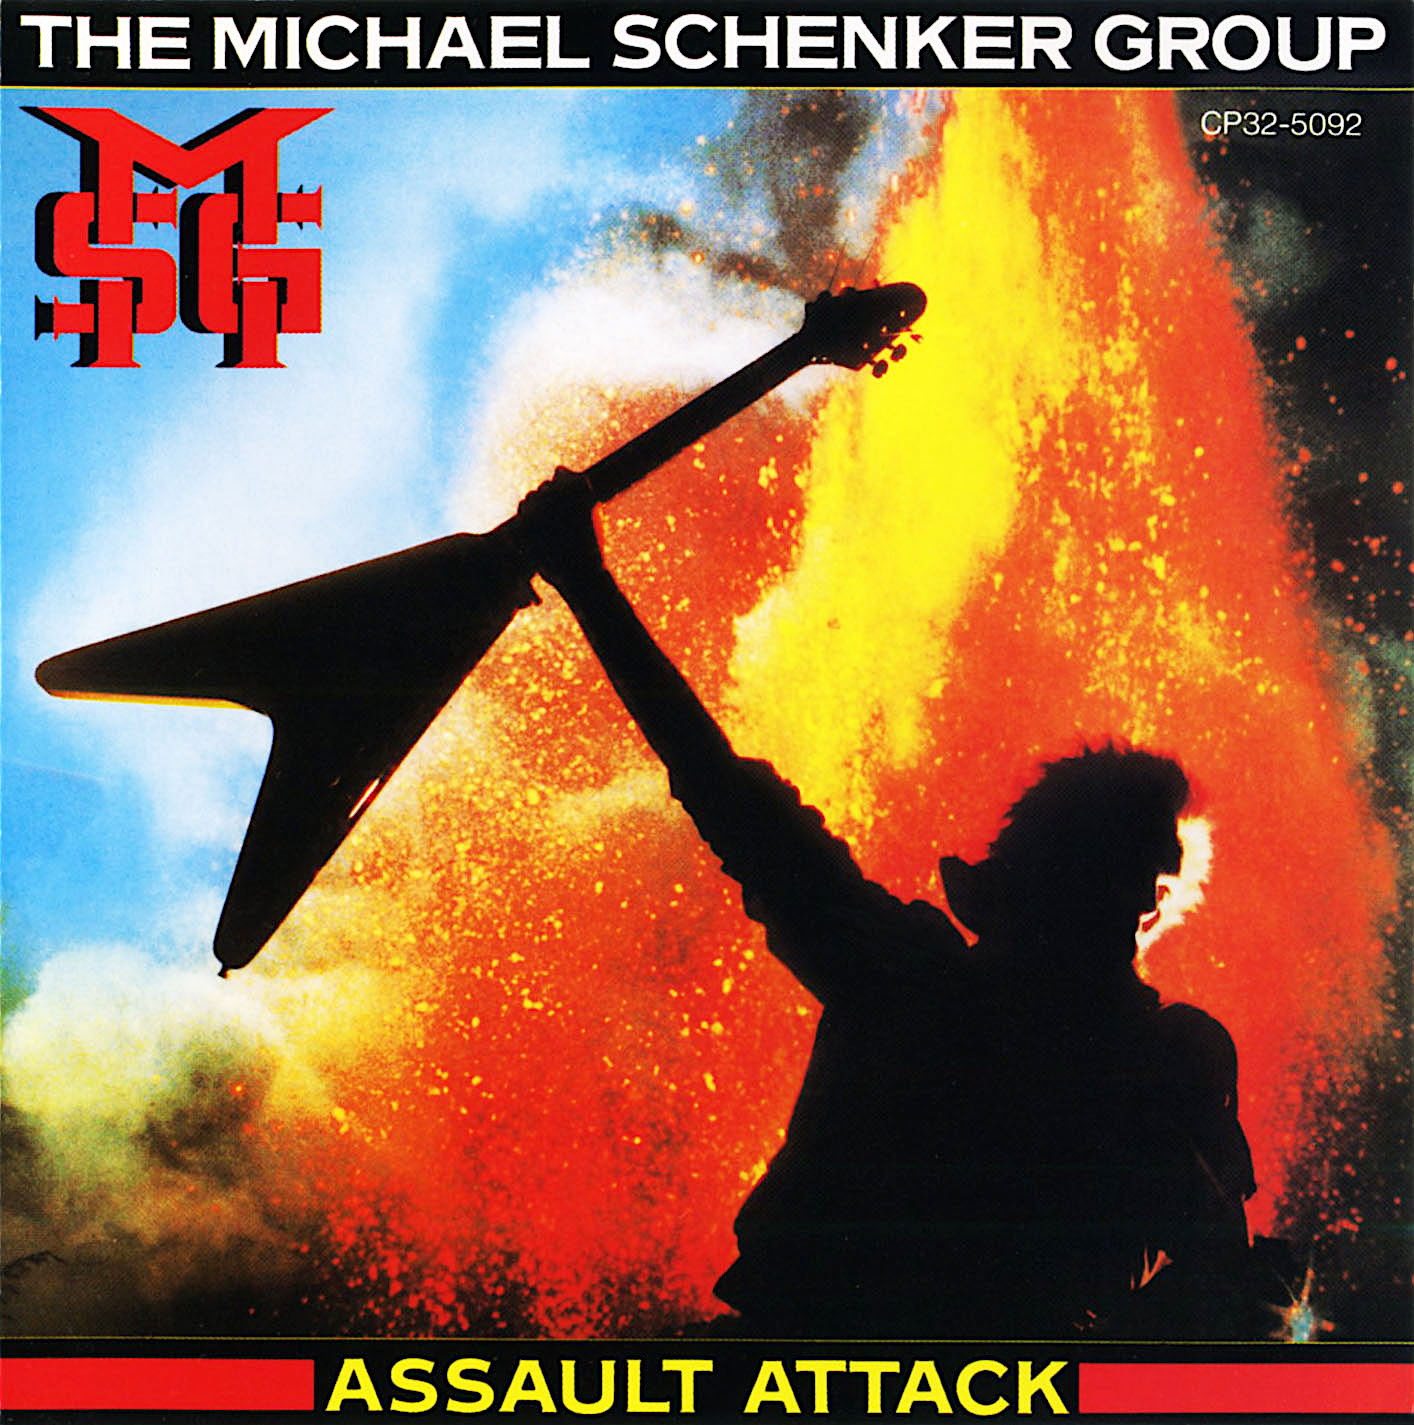 MICHAEL SCHENKER GROUP - Assault Attack cover 